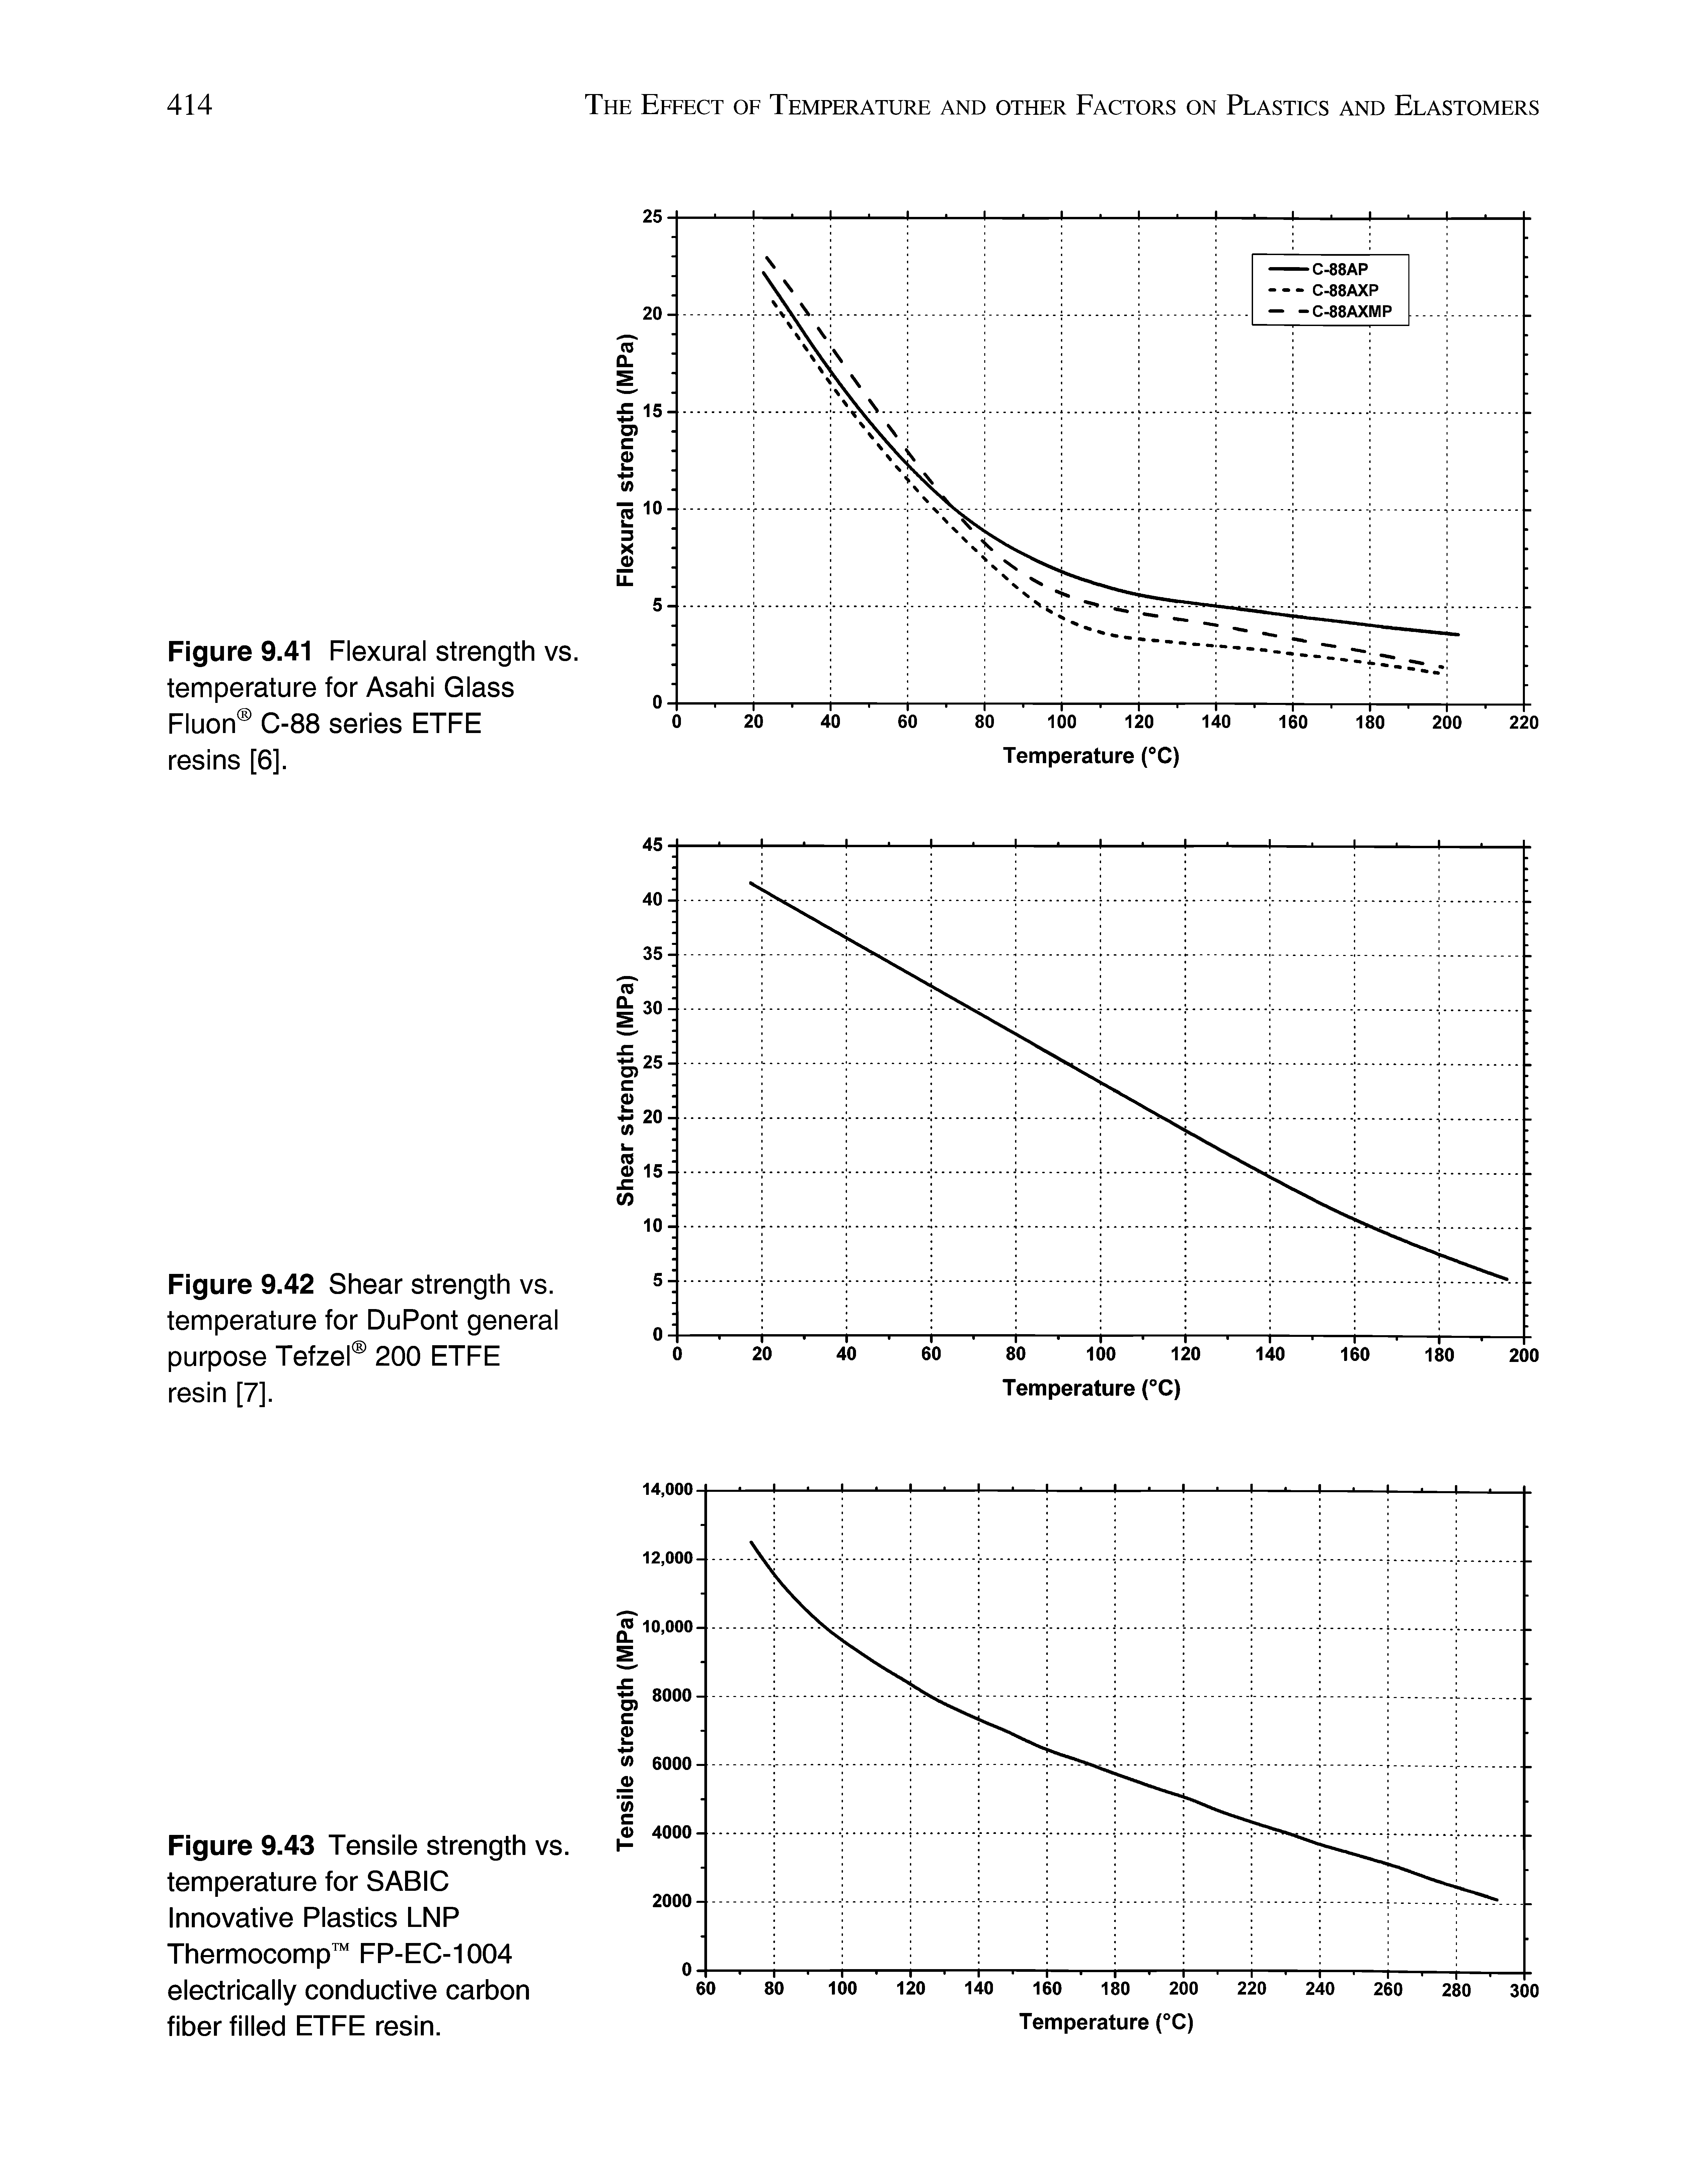 Figure 9.42 Shear strength vs. temperature for DuPont general purpose Tefzel 200 ETFE resin [7],...